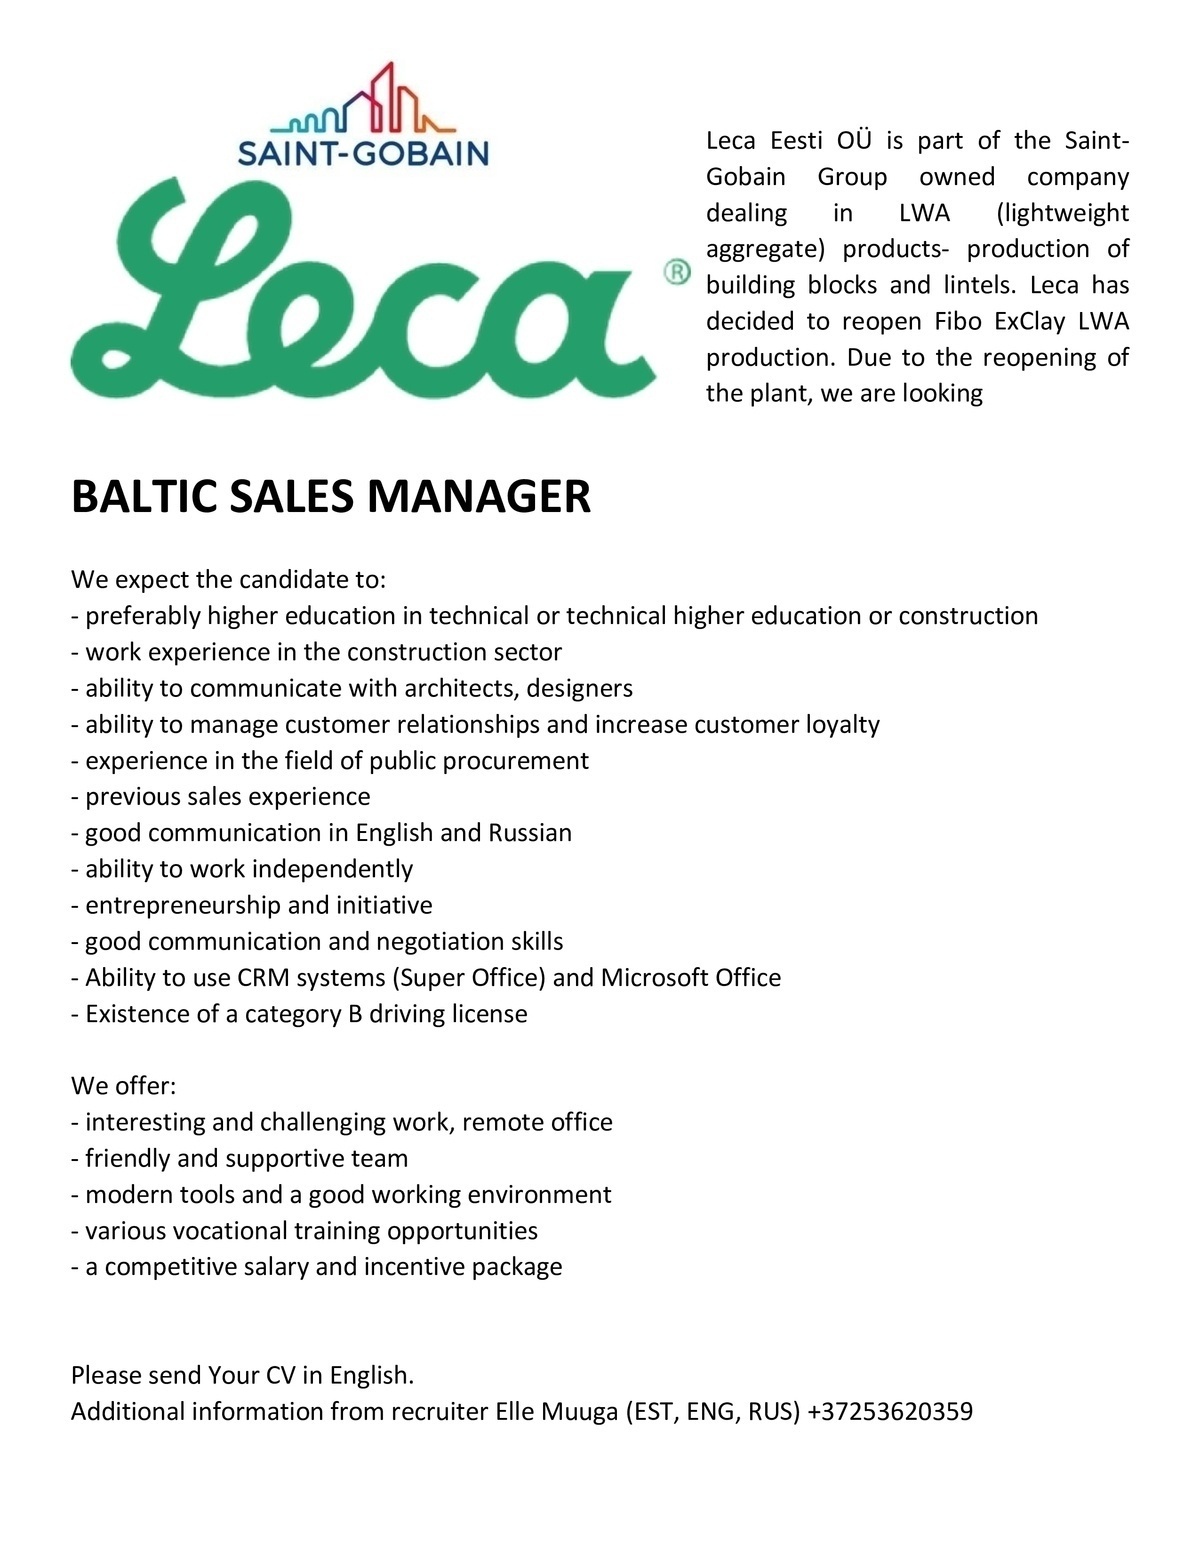 Leca Eesti OÜ (SAINT-GOBAIN) Baltic Sales Manager